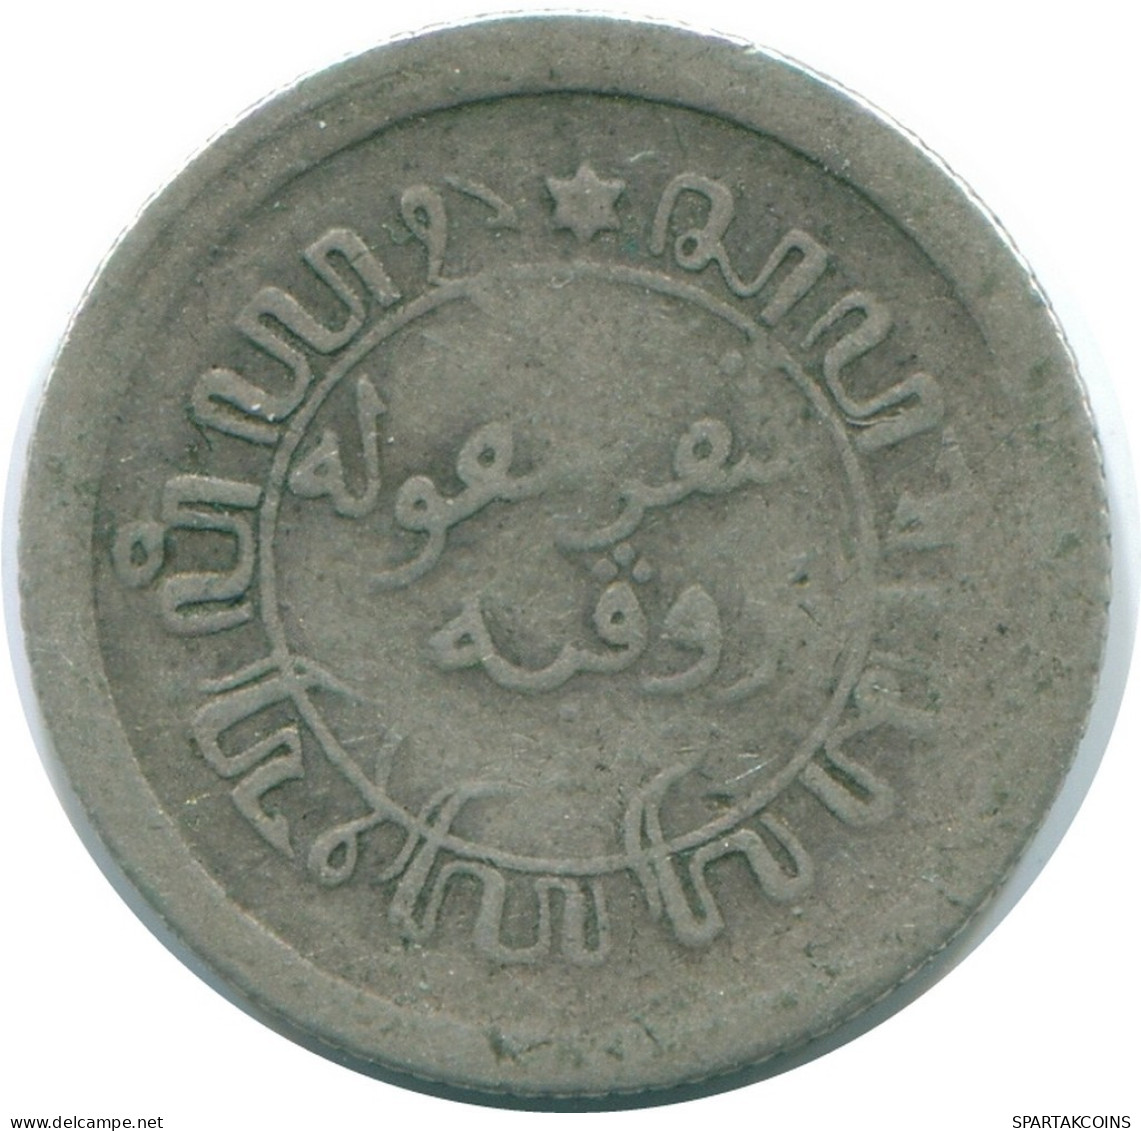 1/10 GULDEN 1918 NETHERLANDS EAST INDIES SILVER Colonial Coin #NL13335.3.U.A - Indes Néerlandaises